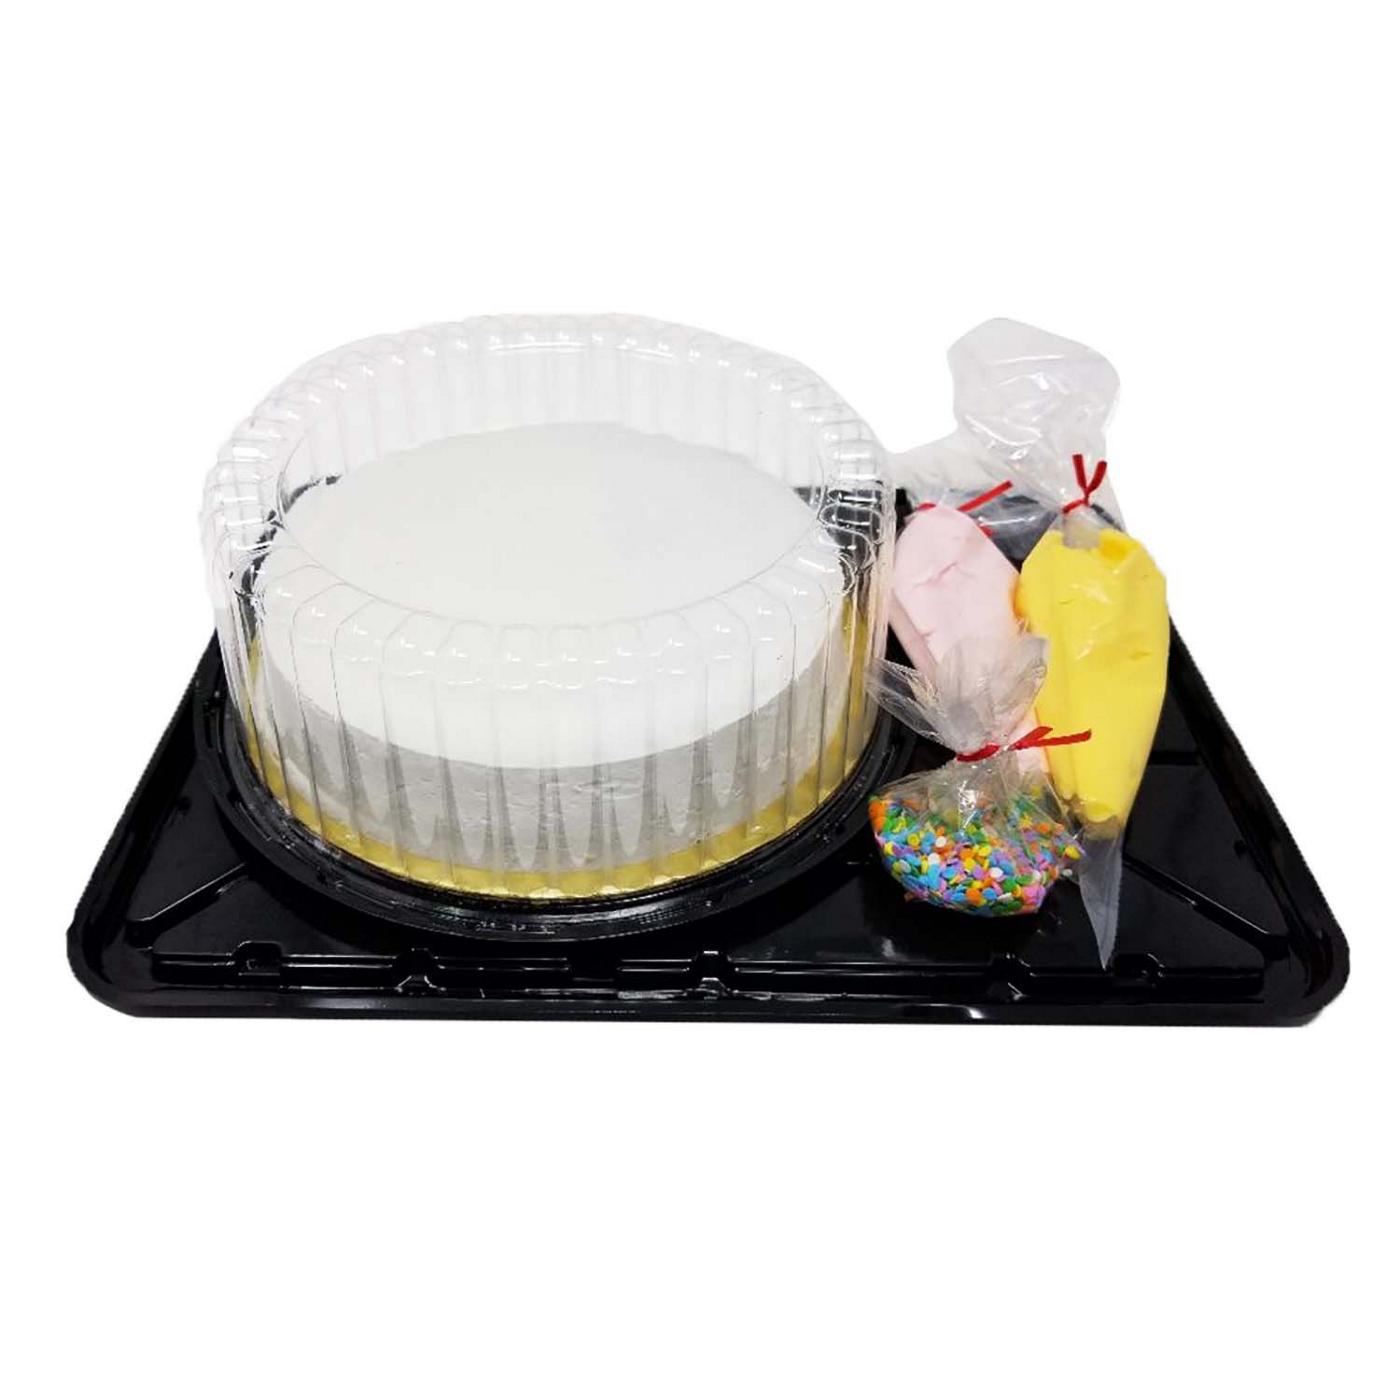 H-E-B White Cake Decorating Kit; image 1 of 2